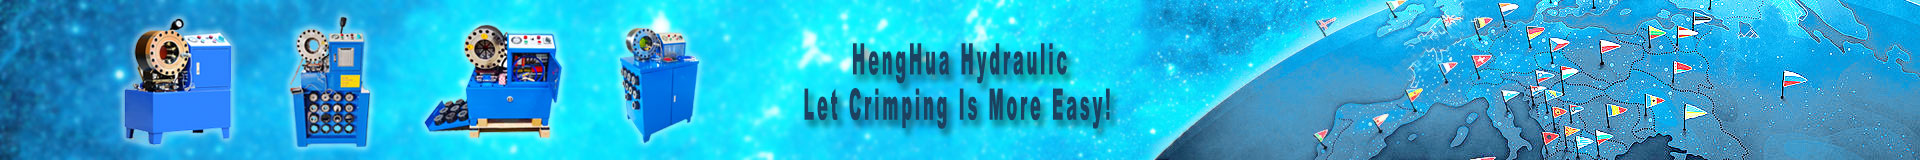 henghua hydralic